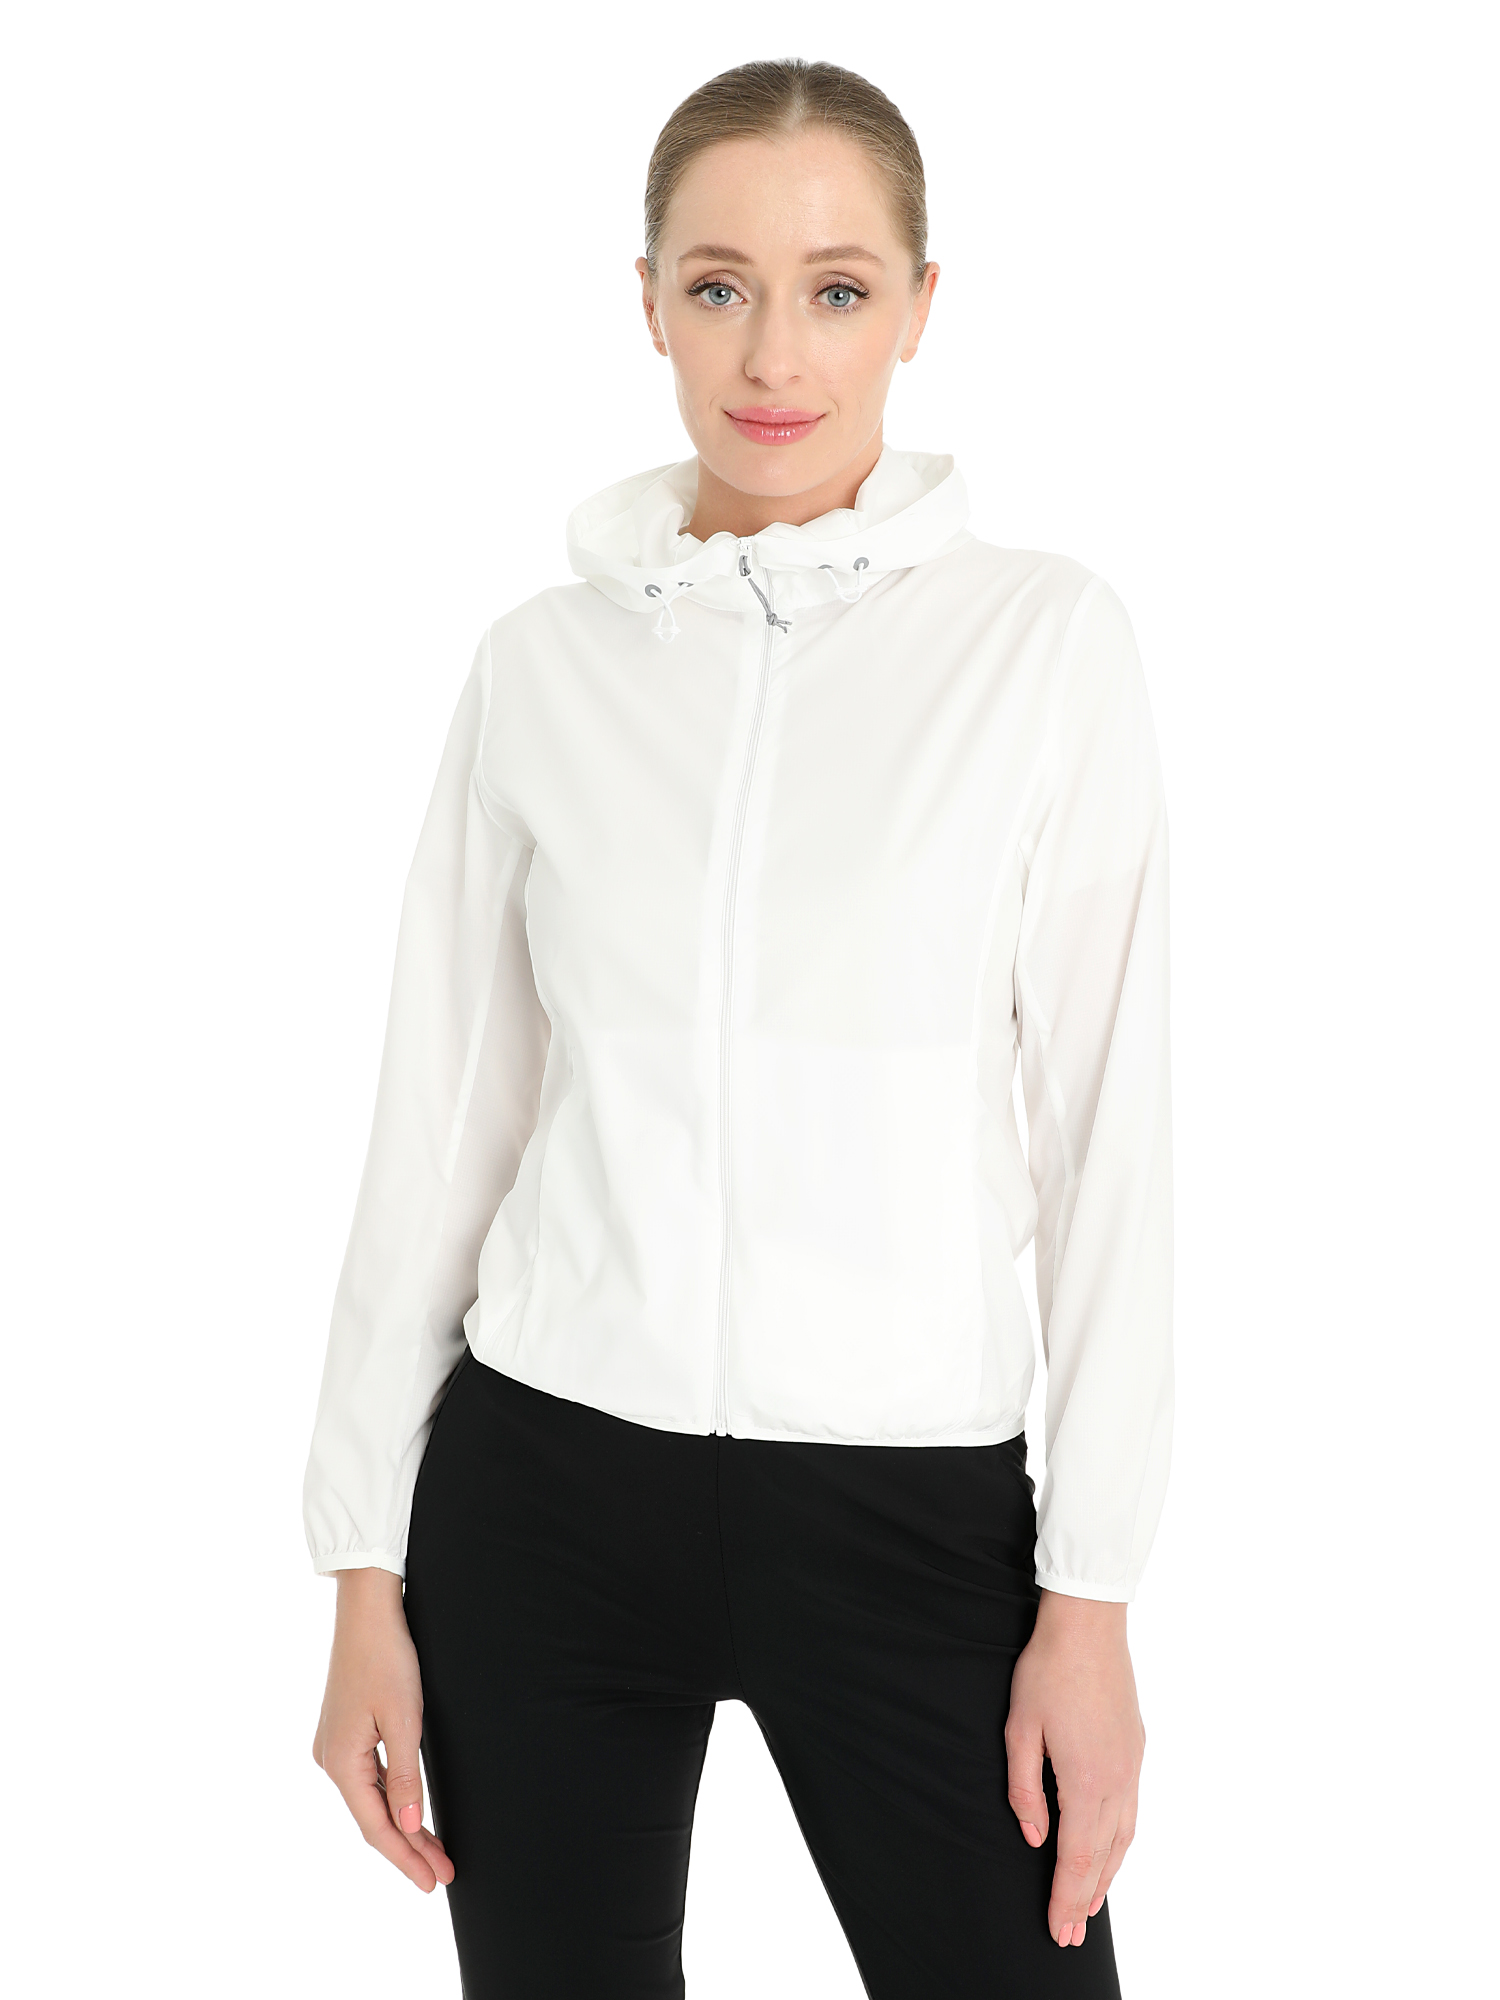 Куртка женская Toread Women's Skin Jacket белая M